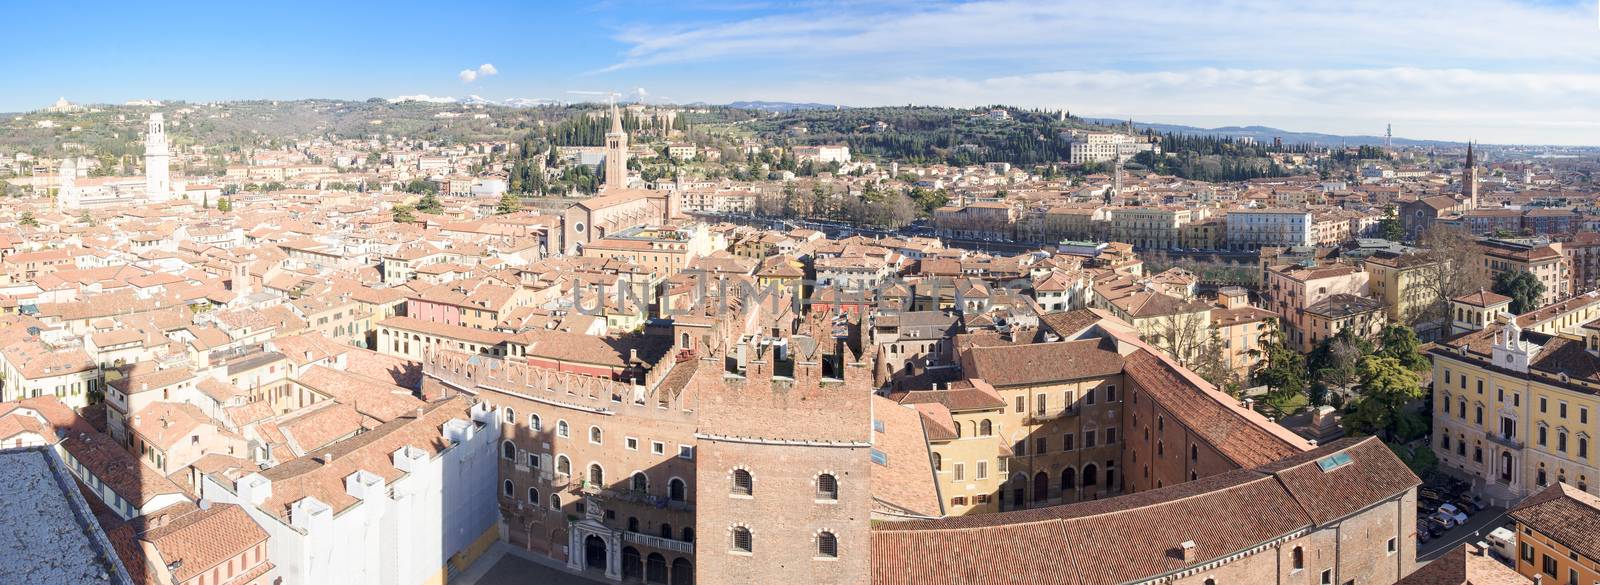 Panoramic view of the historic center of Verona, Veneto, Italy